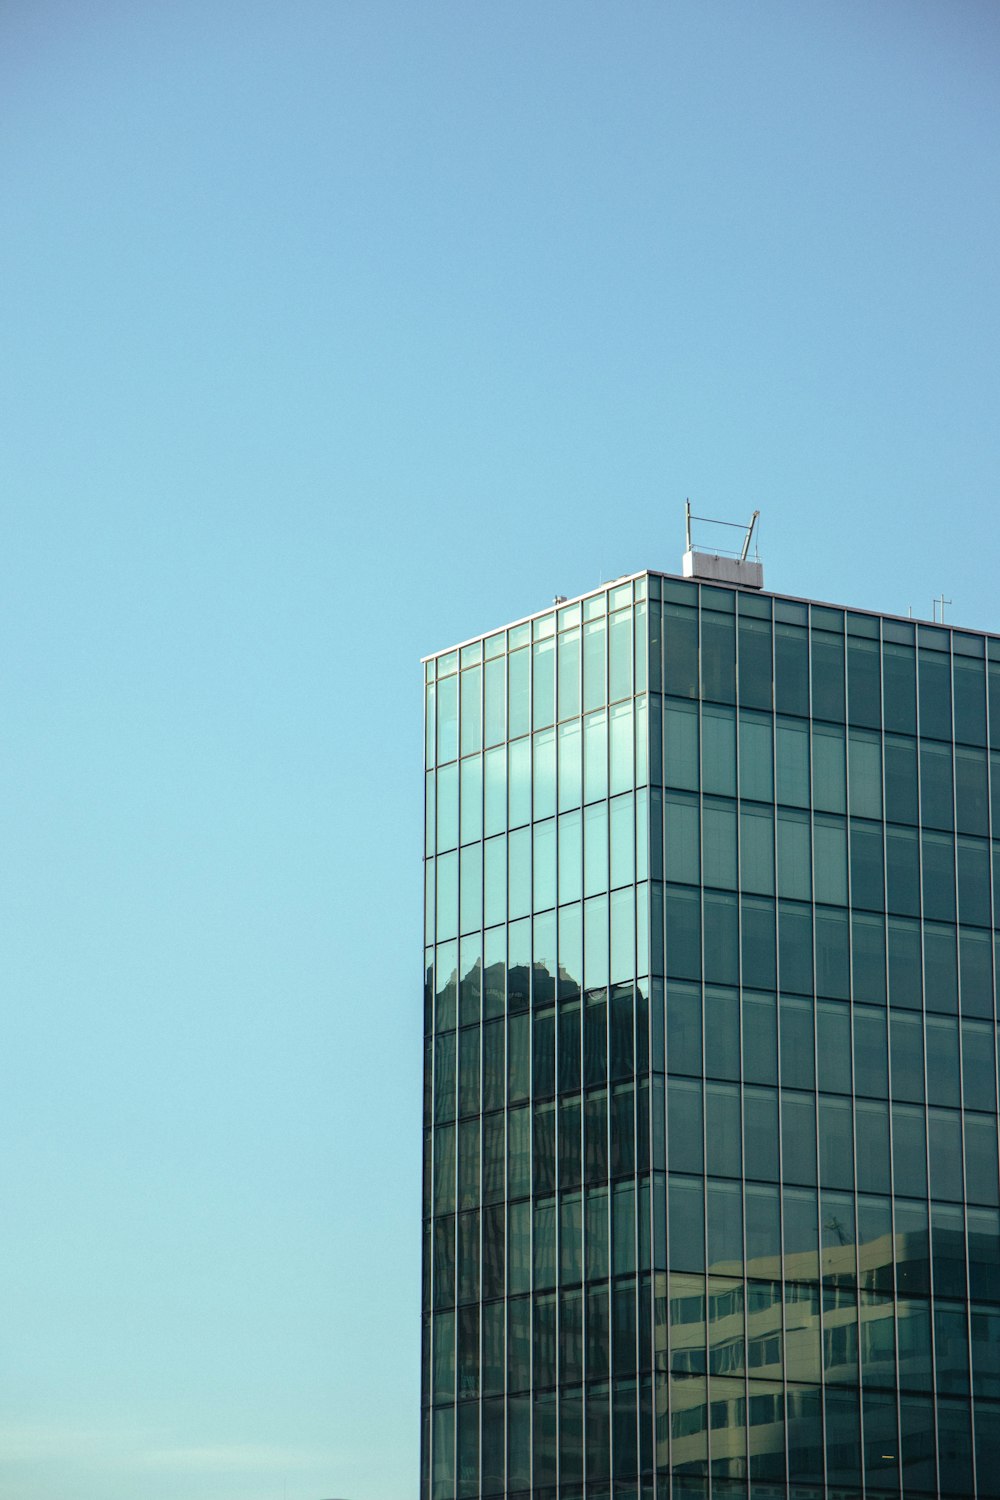 a tall building with a blue sky